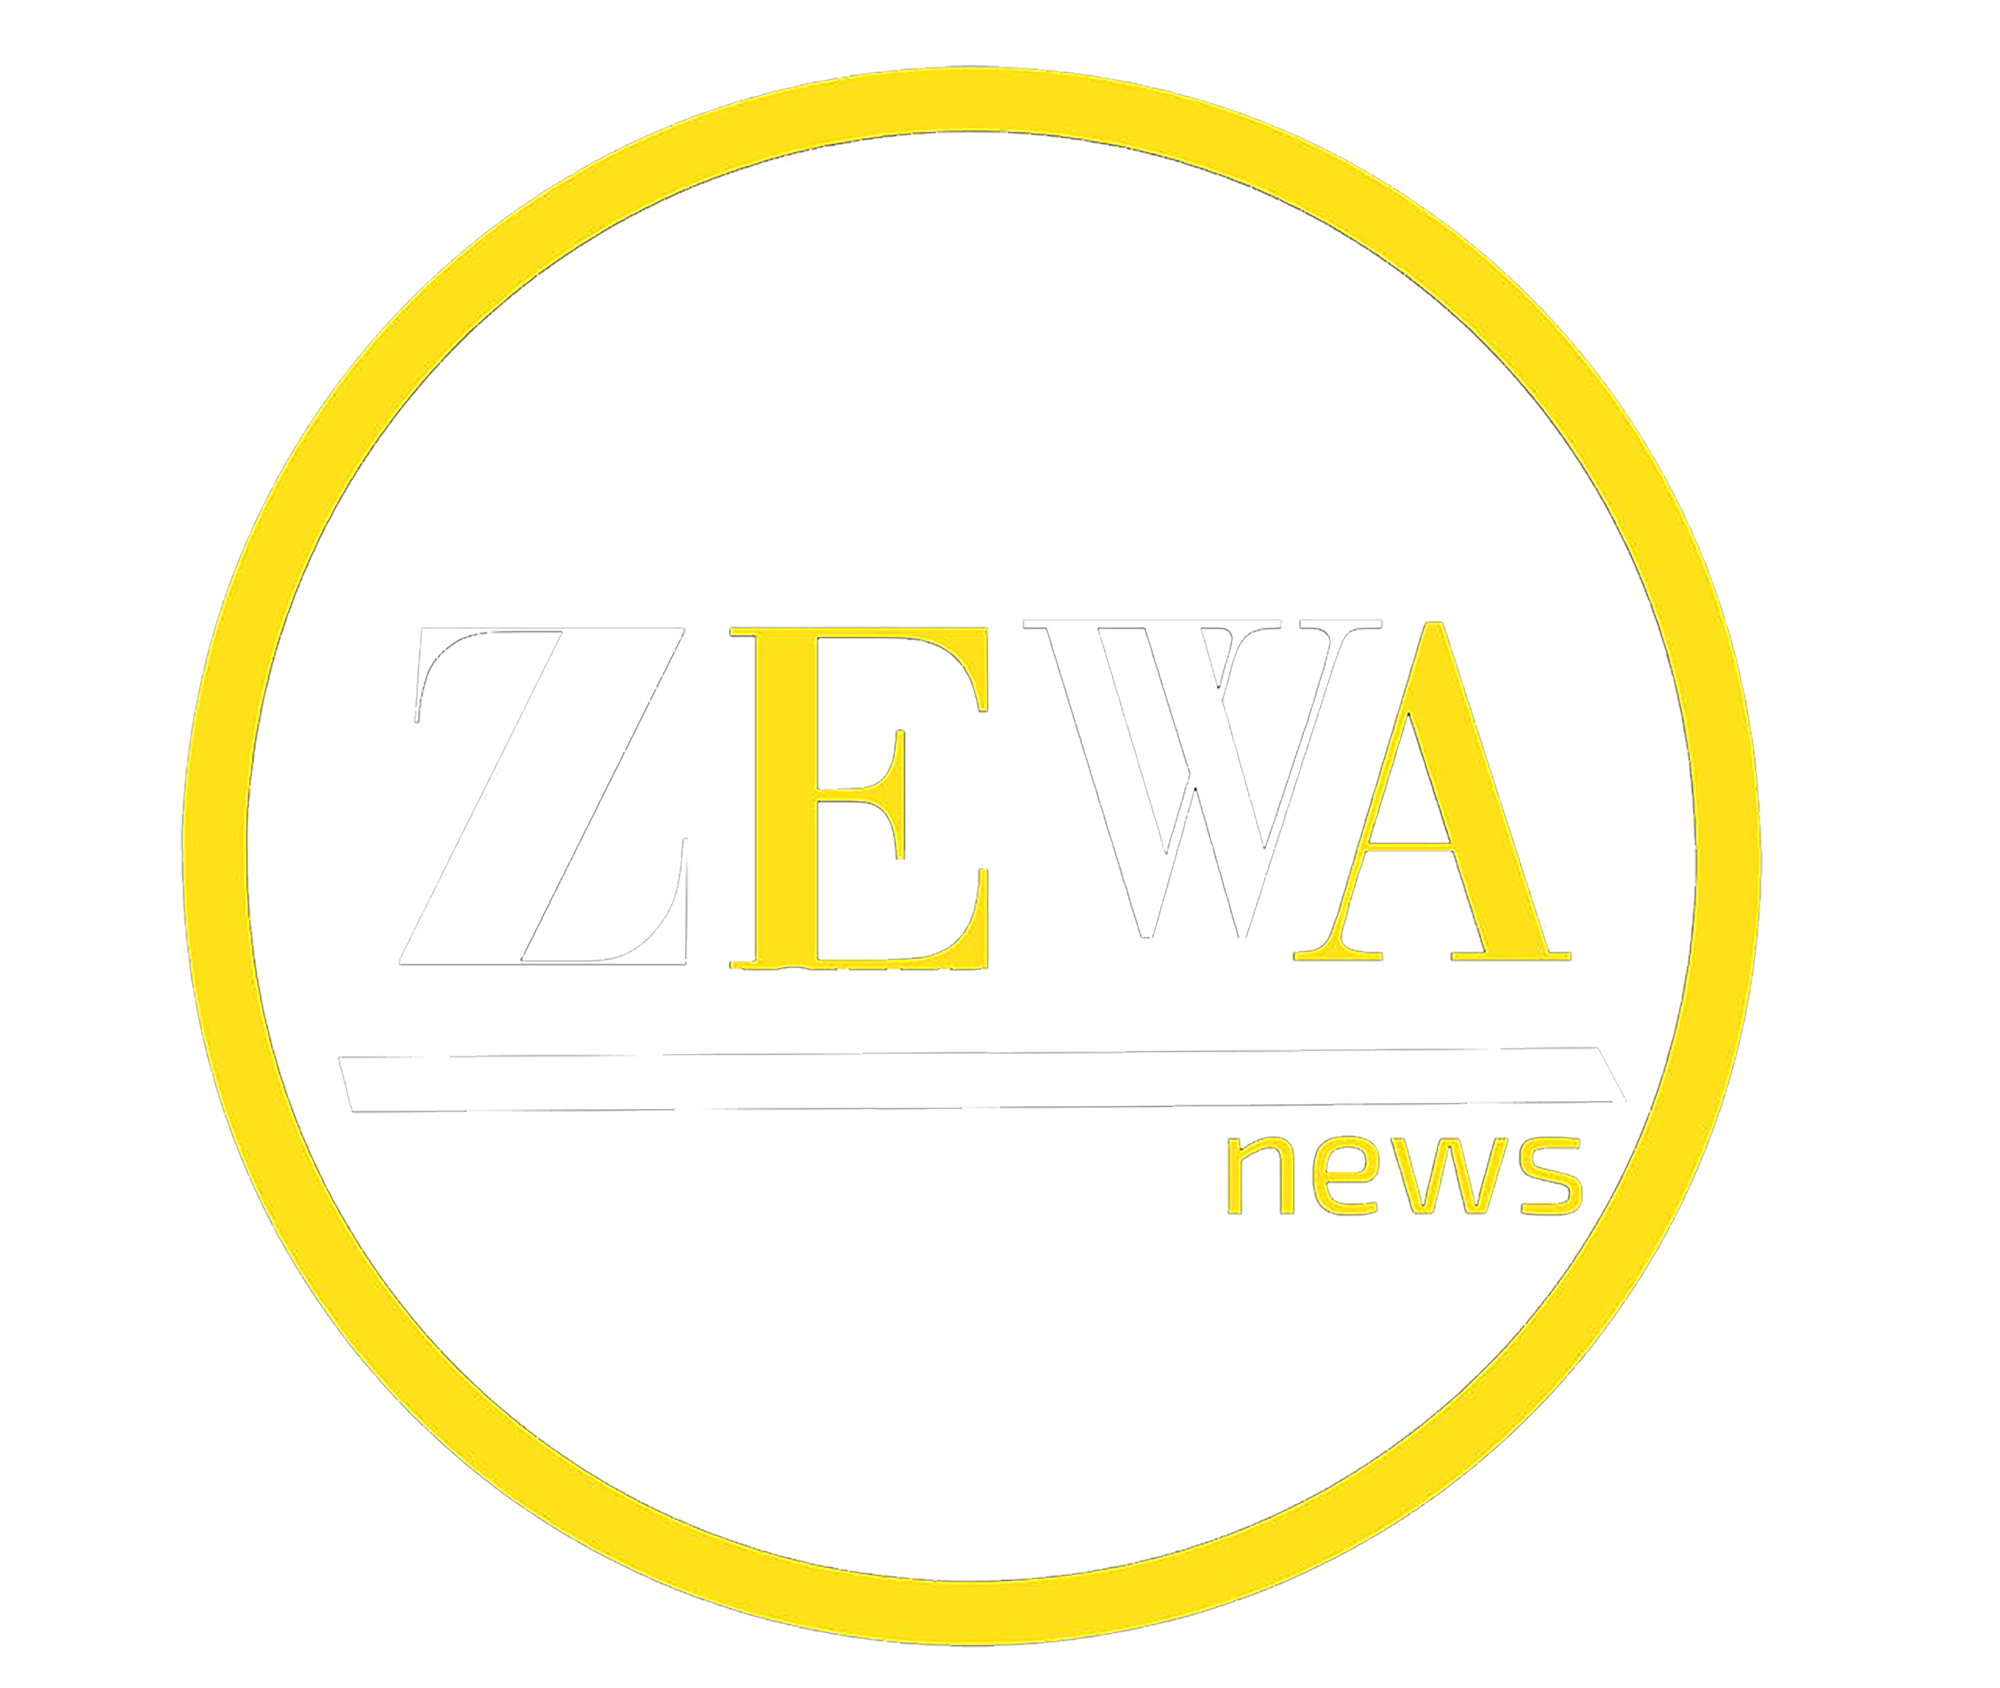 Zewa News - وكالة زيوا الاخبارية